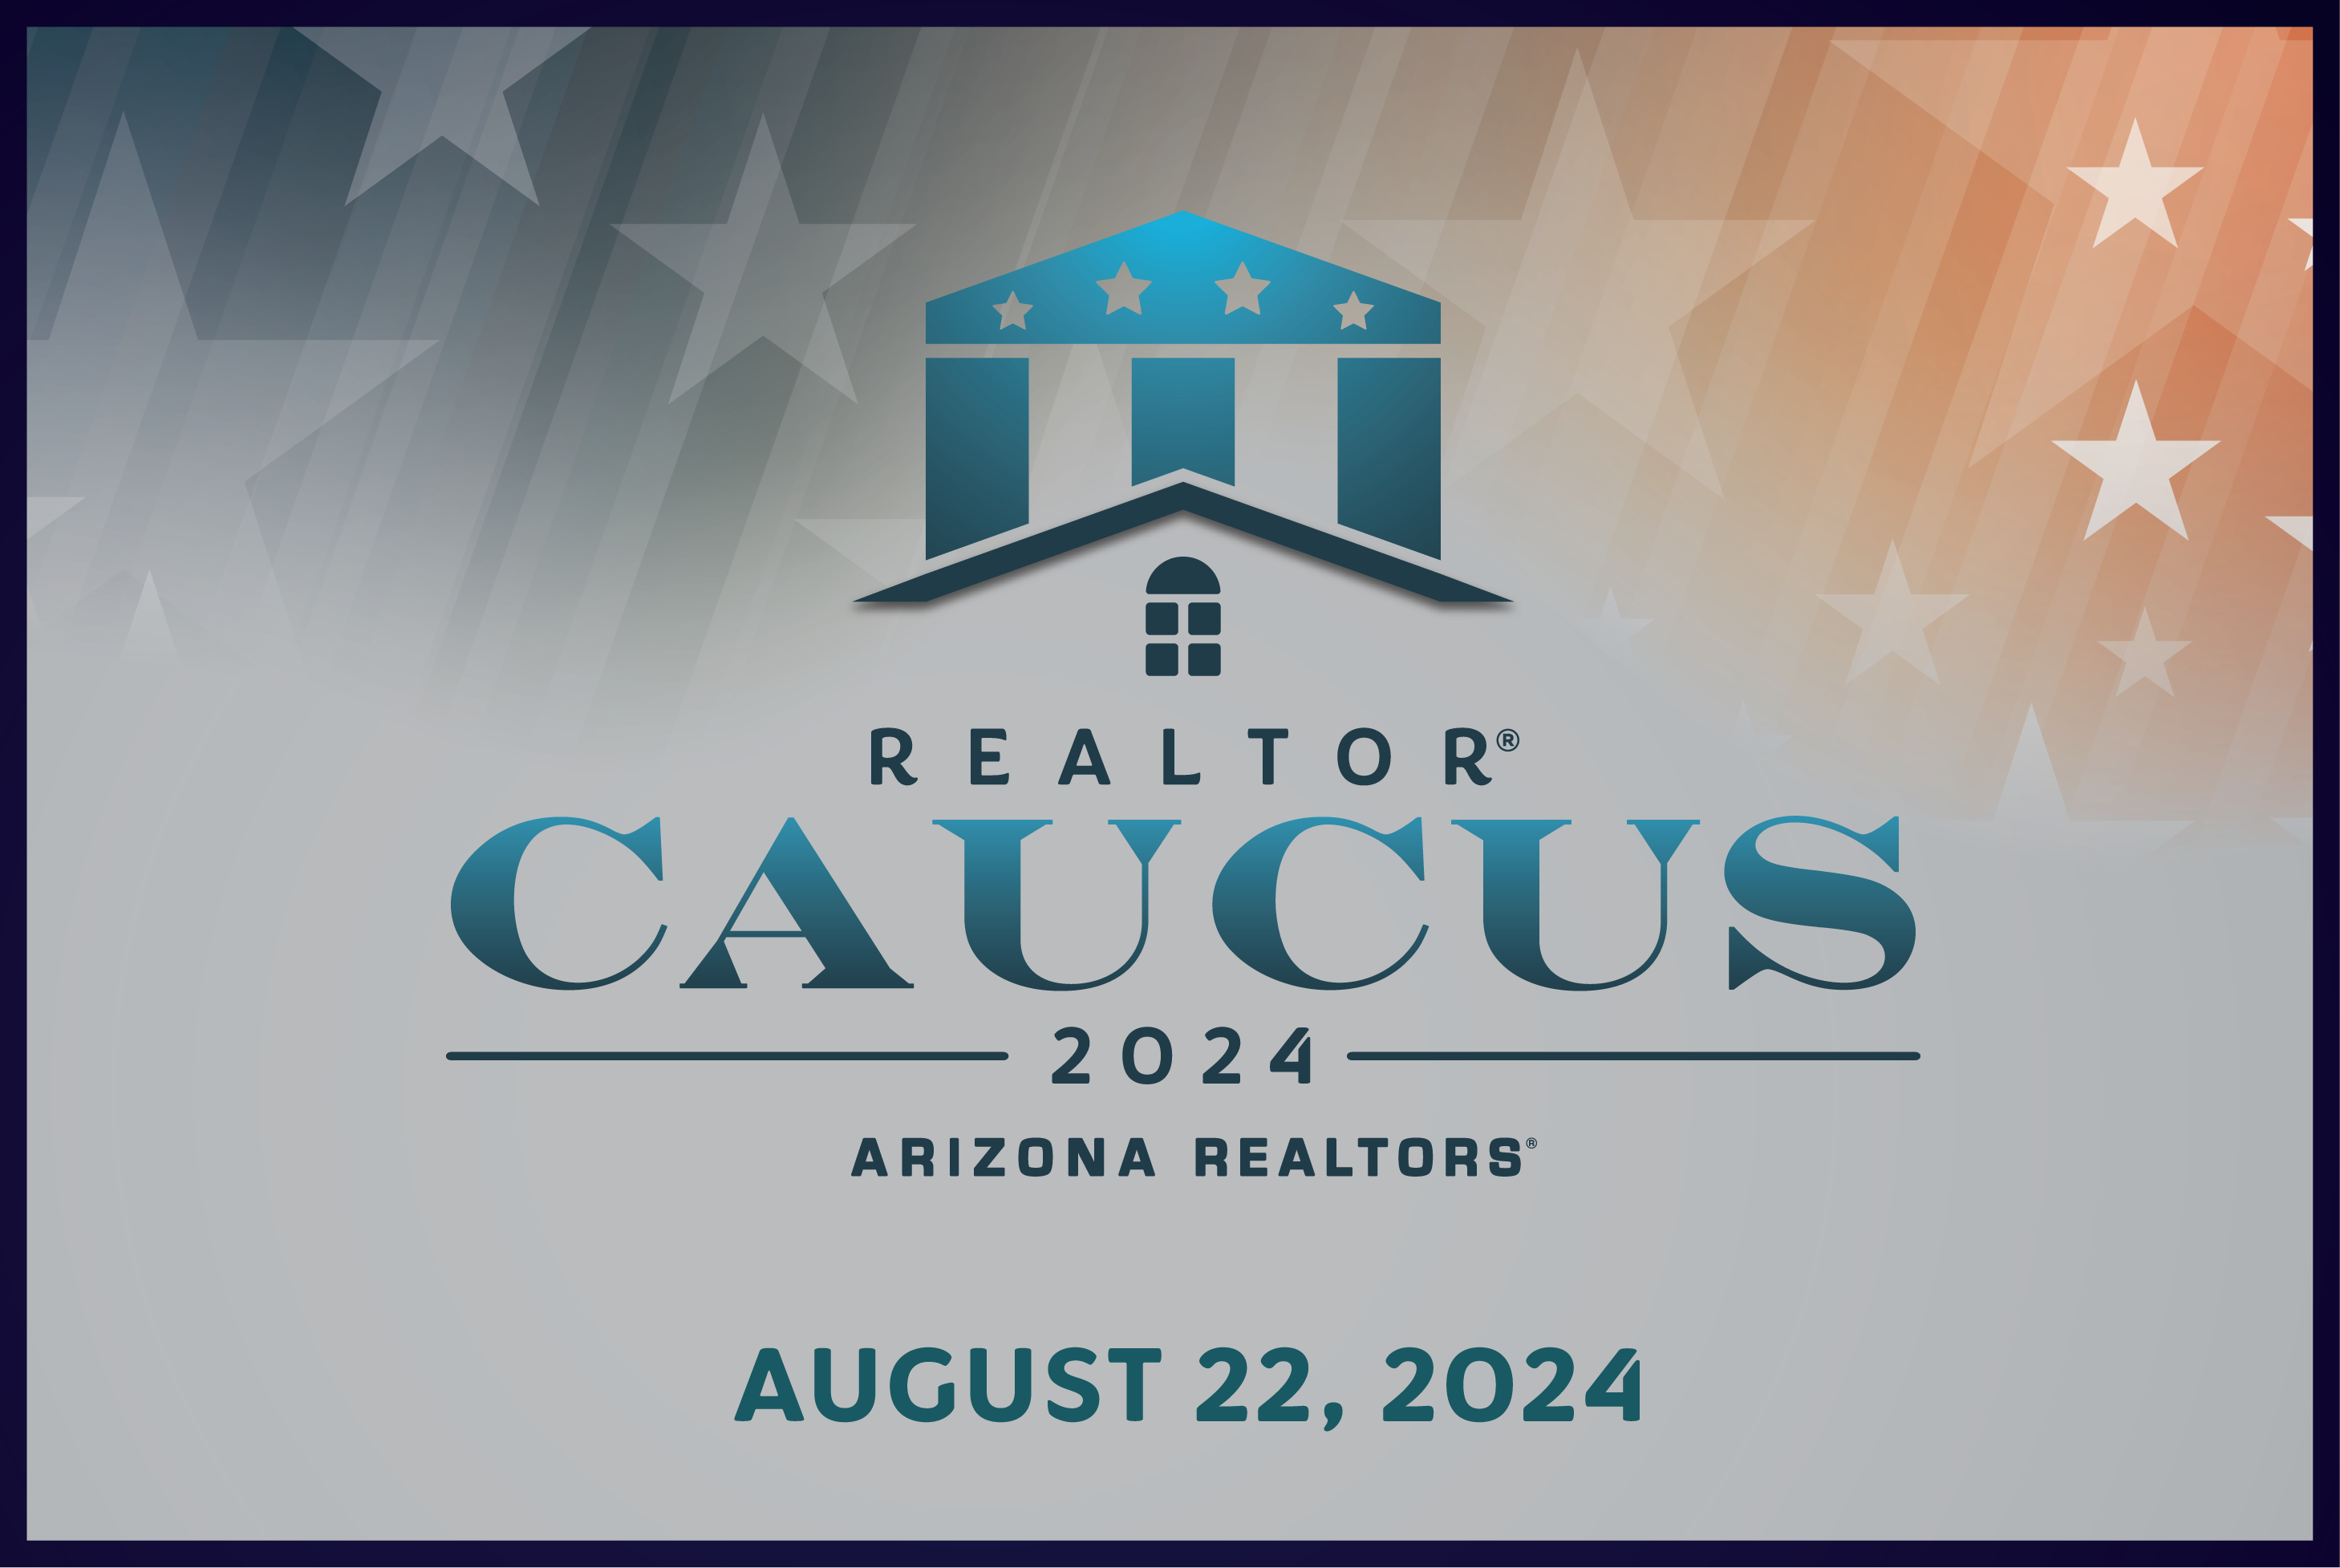 Register for the REALTOR® Caucus